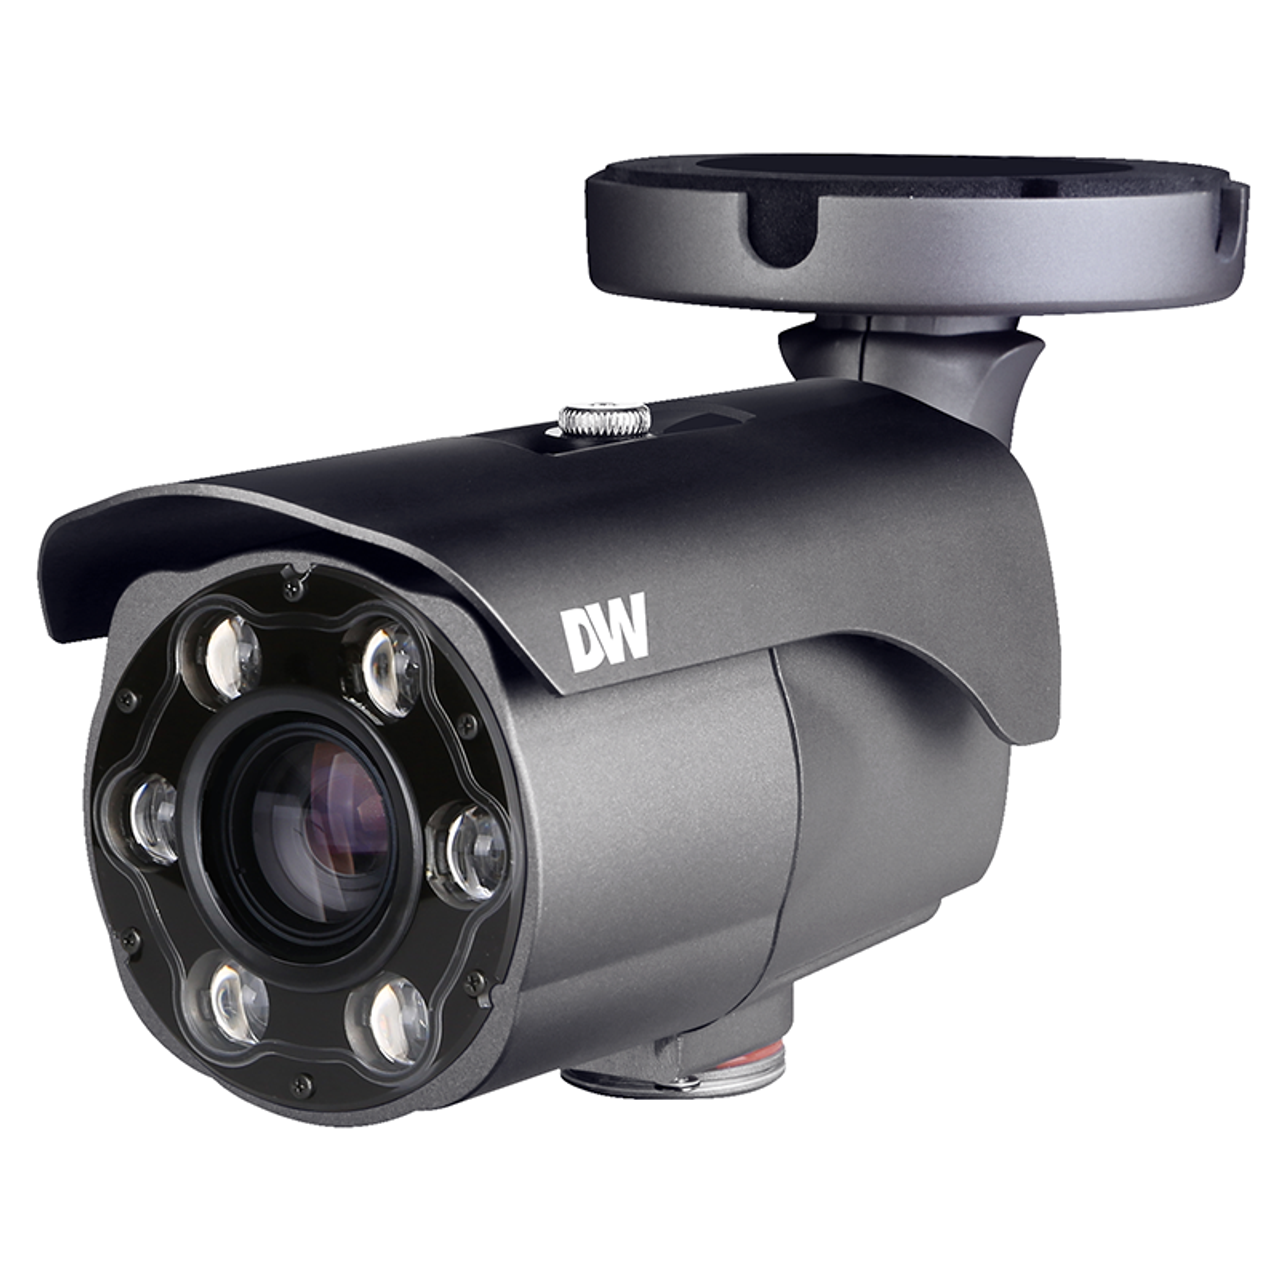 Digital Watchdog DWC-MB45IALPRT 5MP IR Outdoor Bullet IP Security Camera, License Plate Recognition